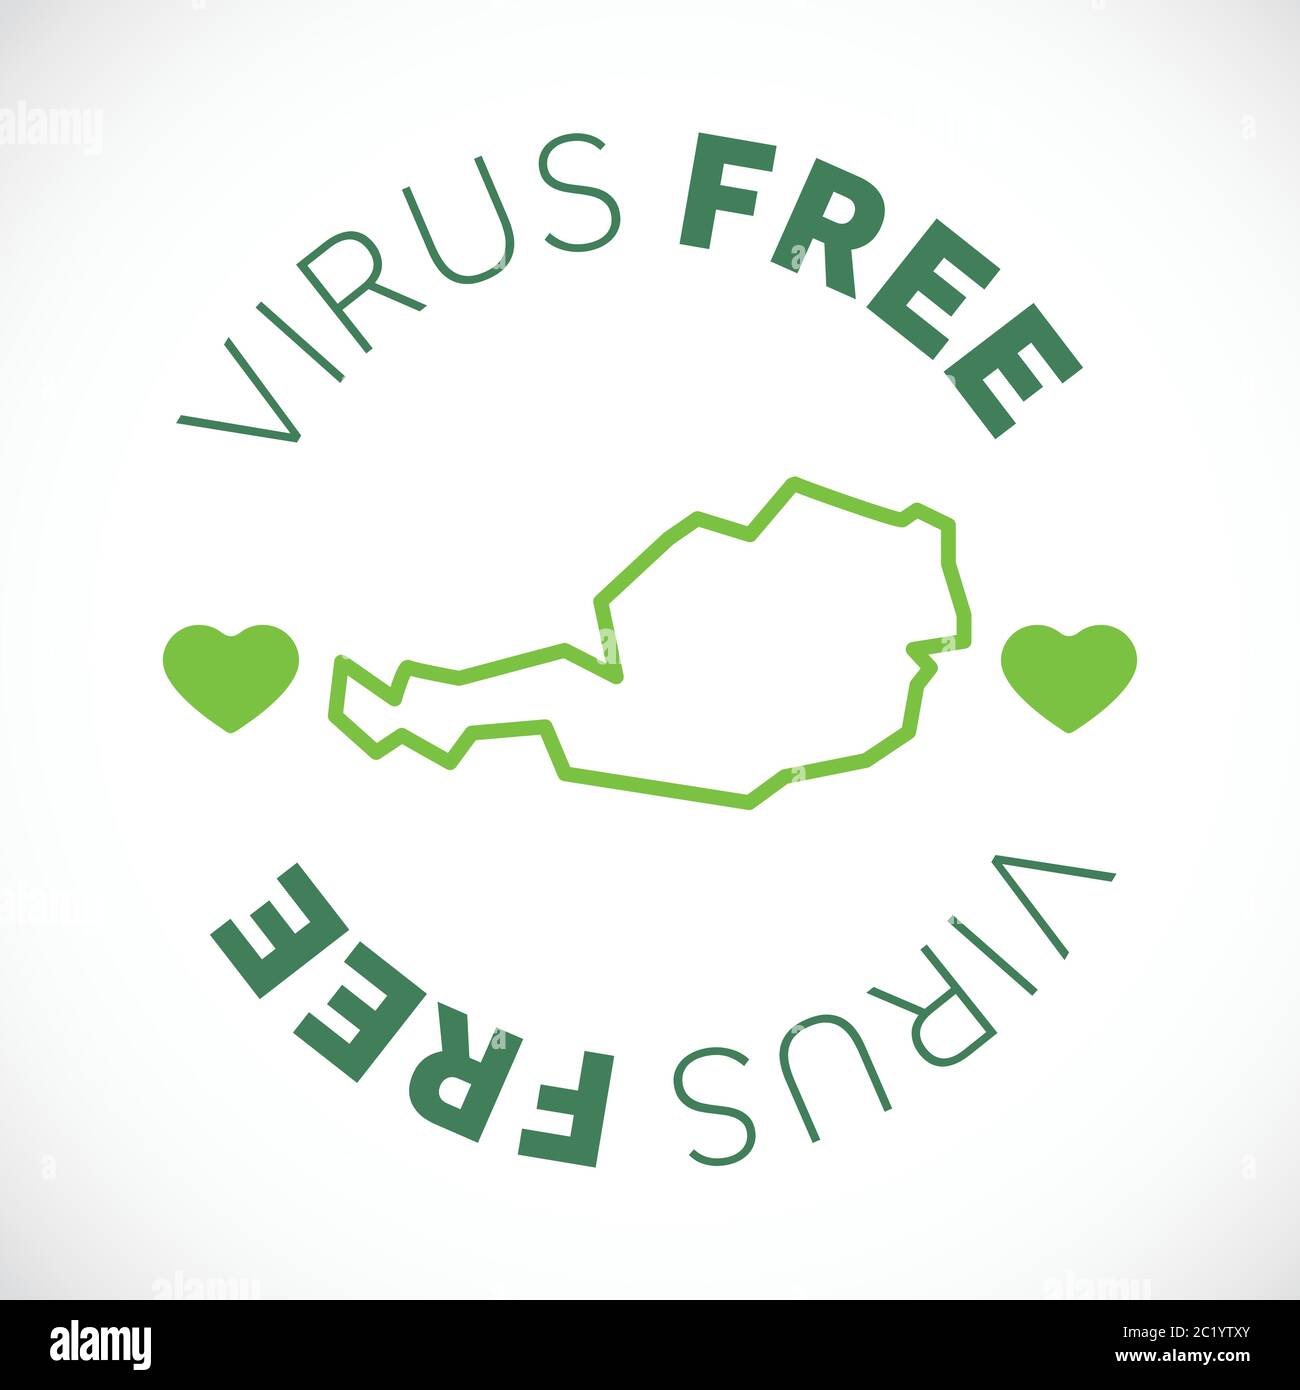 Austria map cornavirus free zone. Virus clear area. Stock Vector